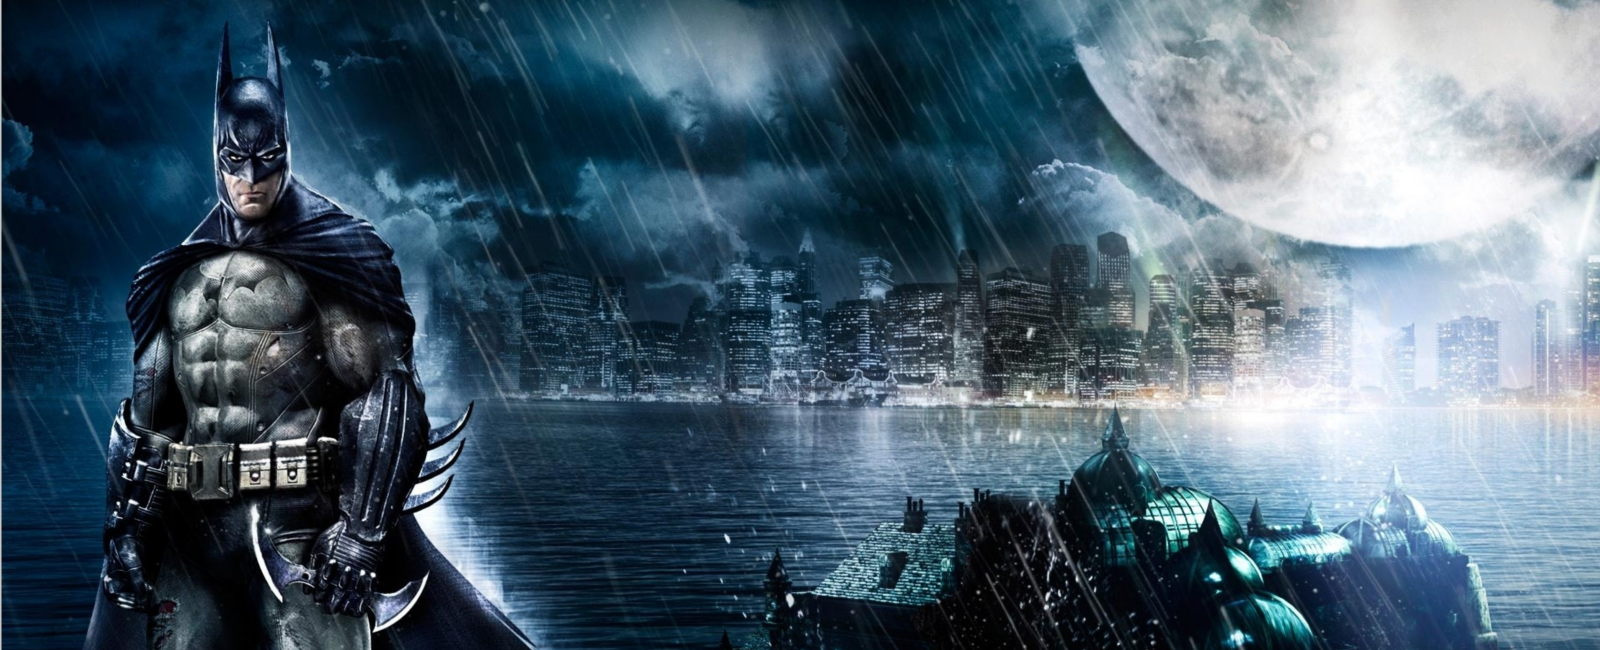 Batman: Arkham Asylum Game of the Year, PC - Steam